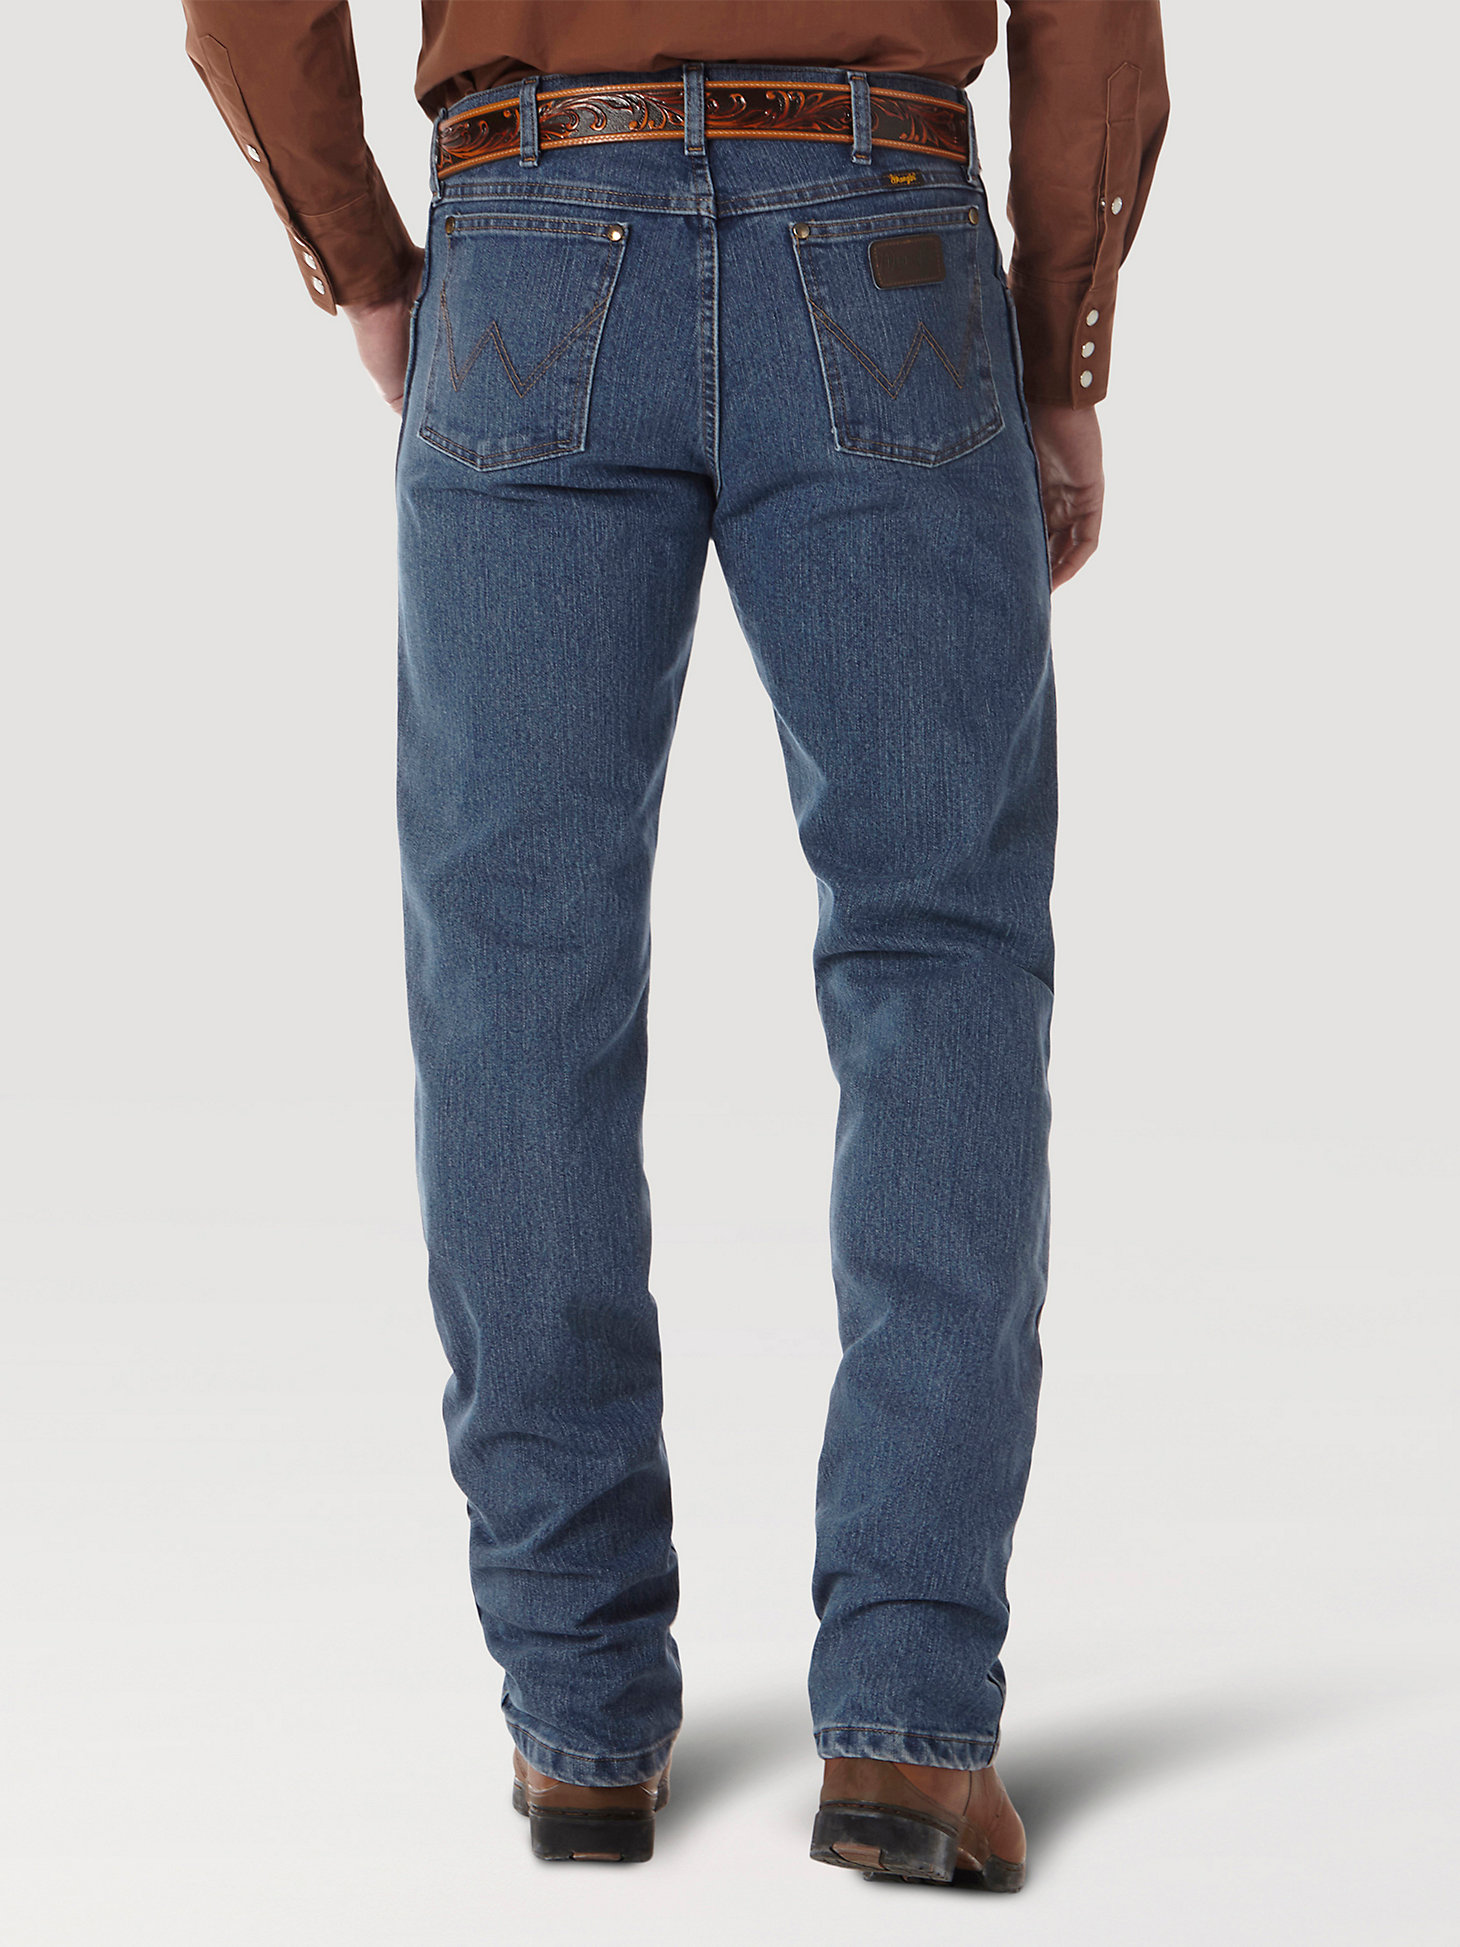 Premium Performance Advanced Comfort Cowboy Cut® Regular Fit Jean in Mid Tint alternative view 2